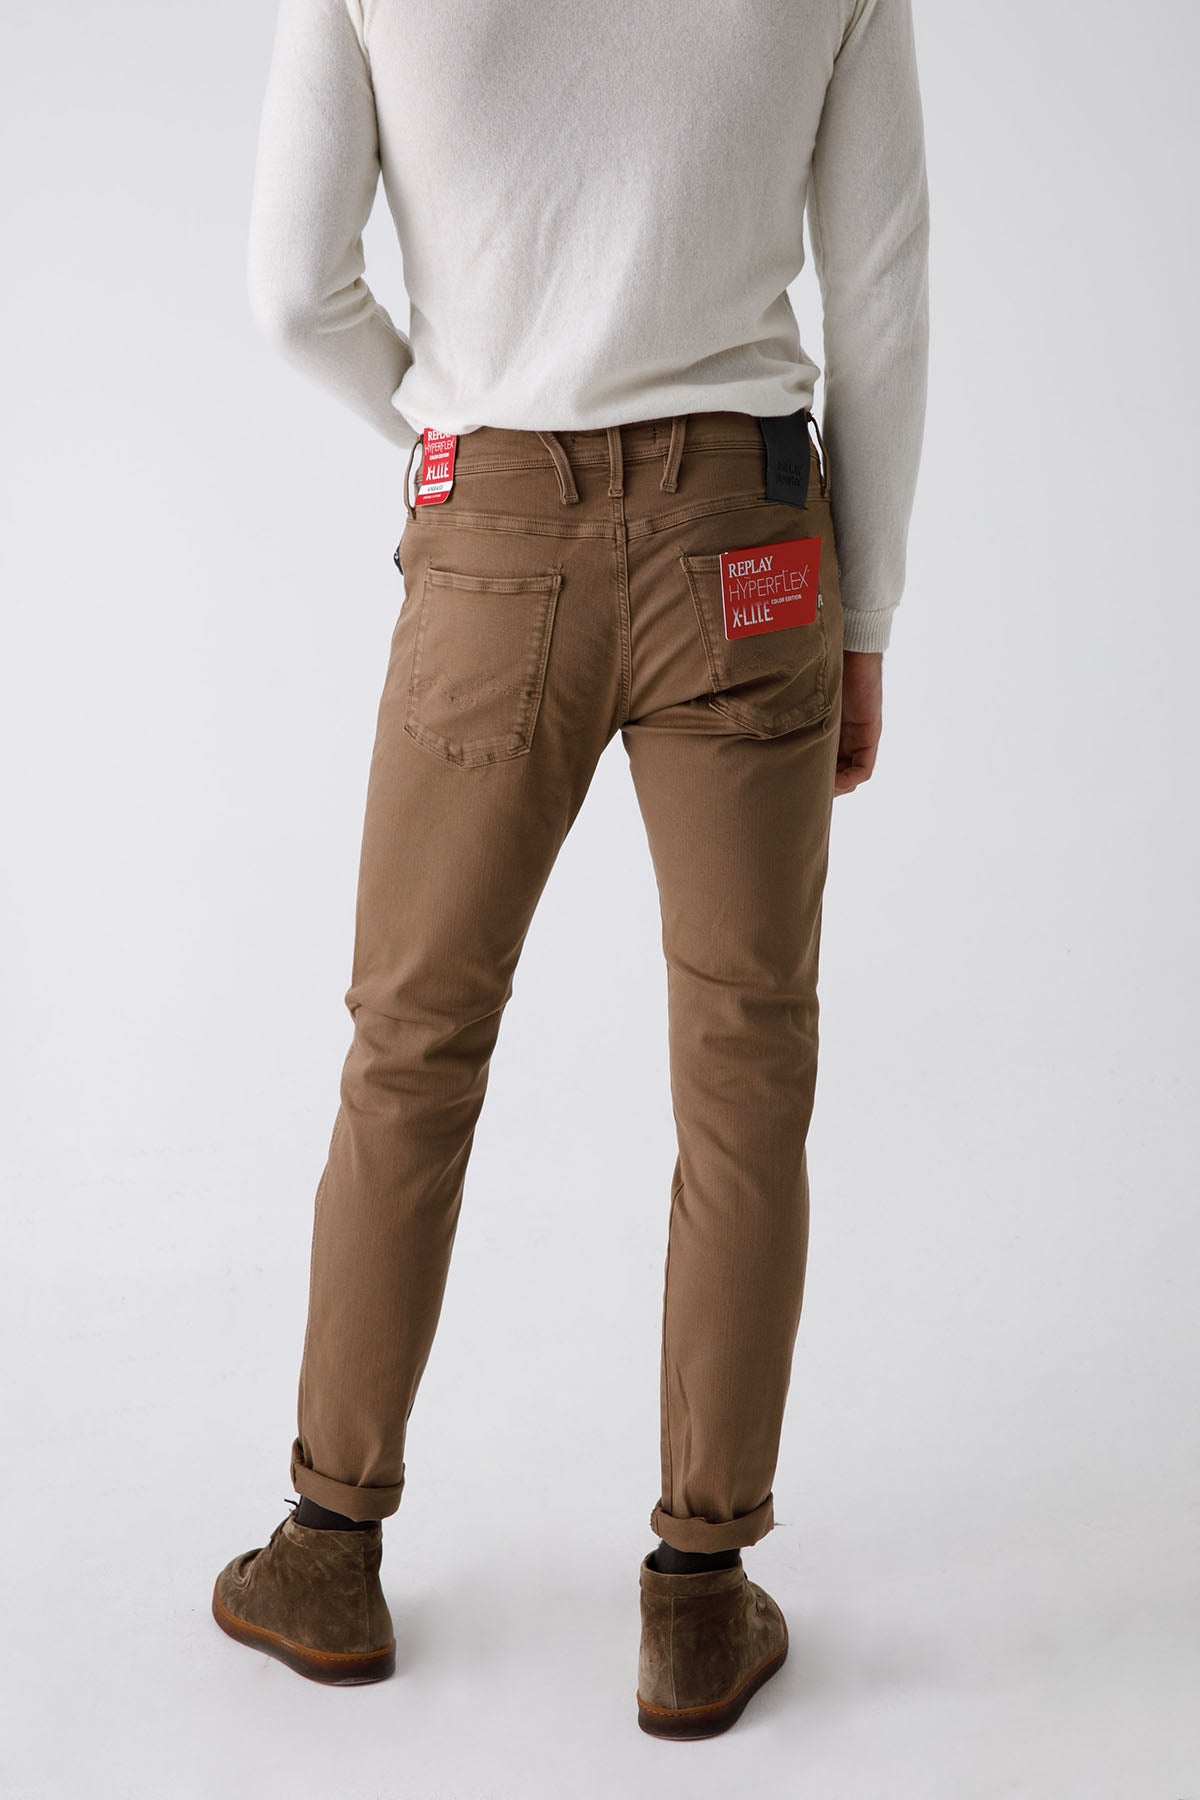 Replay Hyperflex Anbass Color Edition X-Lite Slim Fit Jeans-Libas Trendy Fashion Store